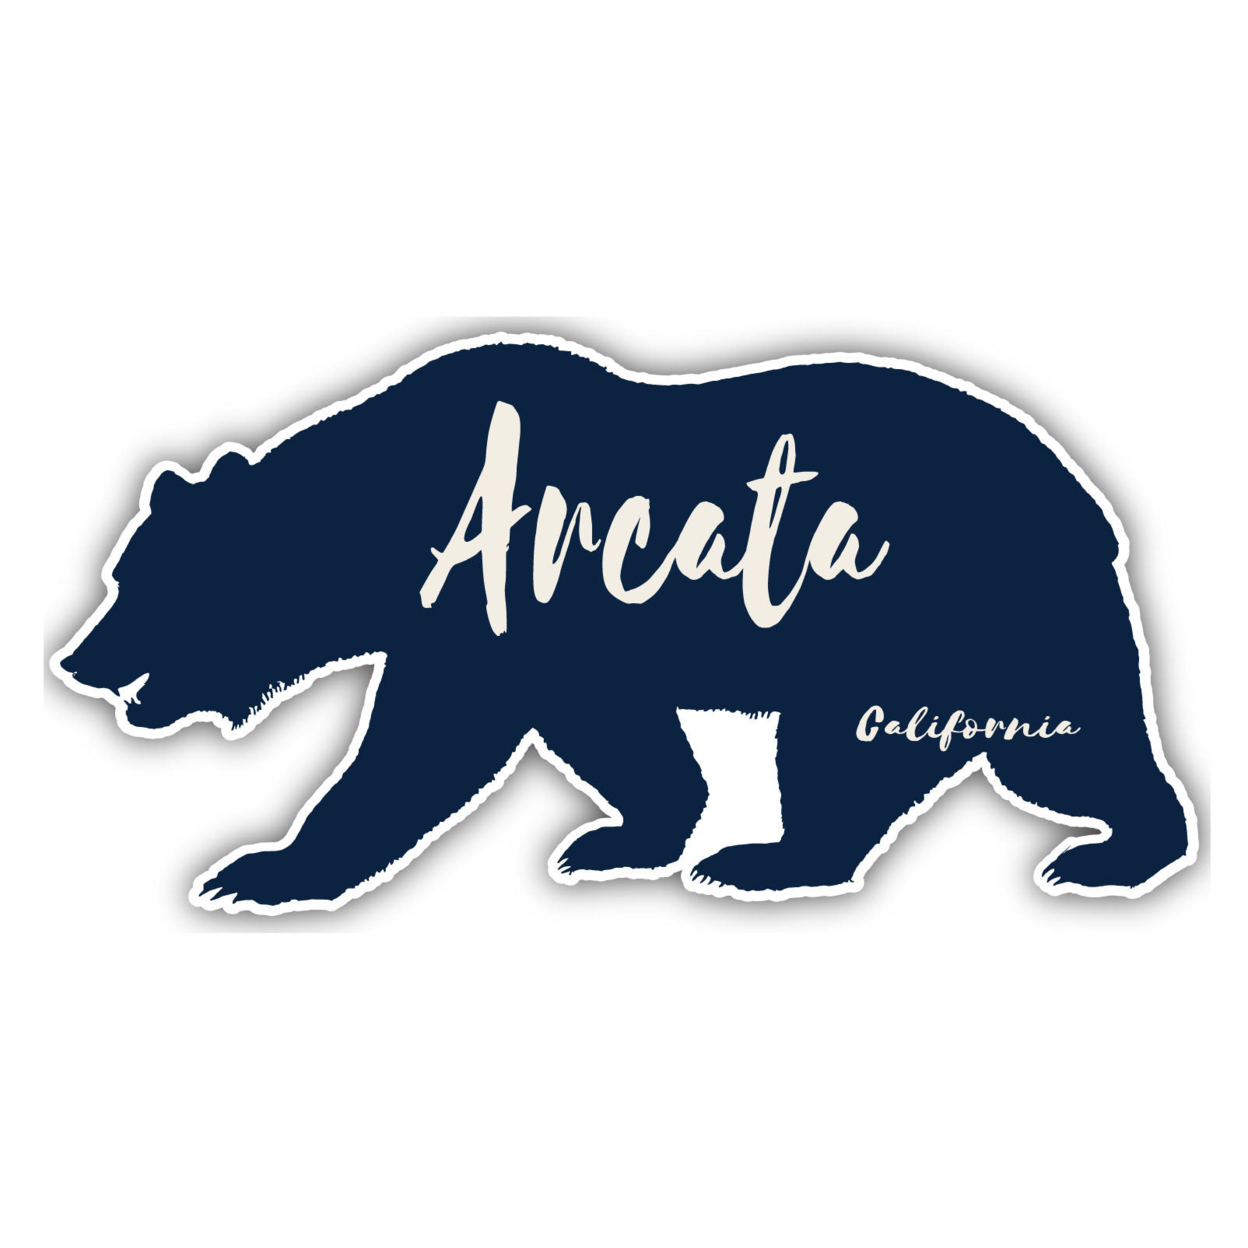 Arcata California Souvenir Decorative Stickers (Choose Theme And Size) - 4-Pack, 6-Inch, Bear